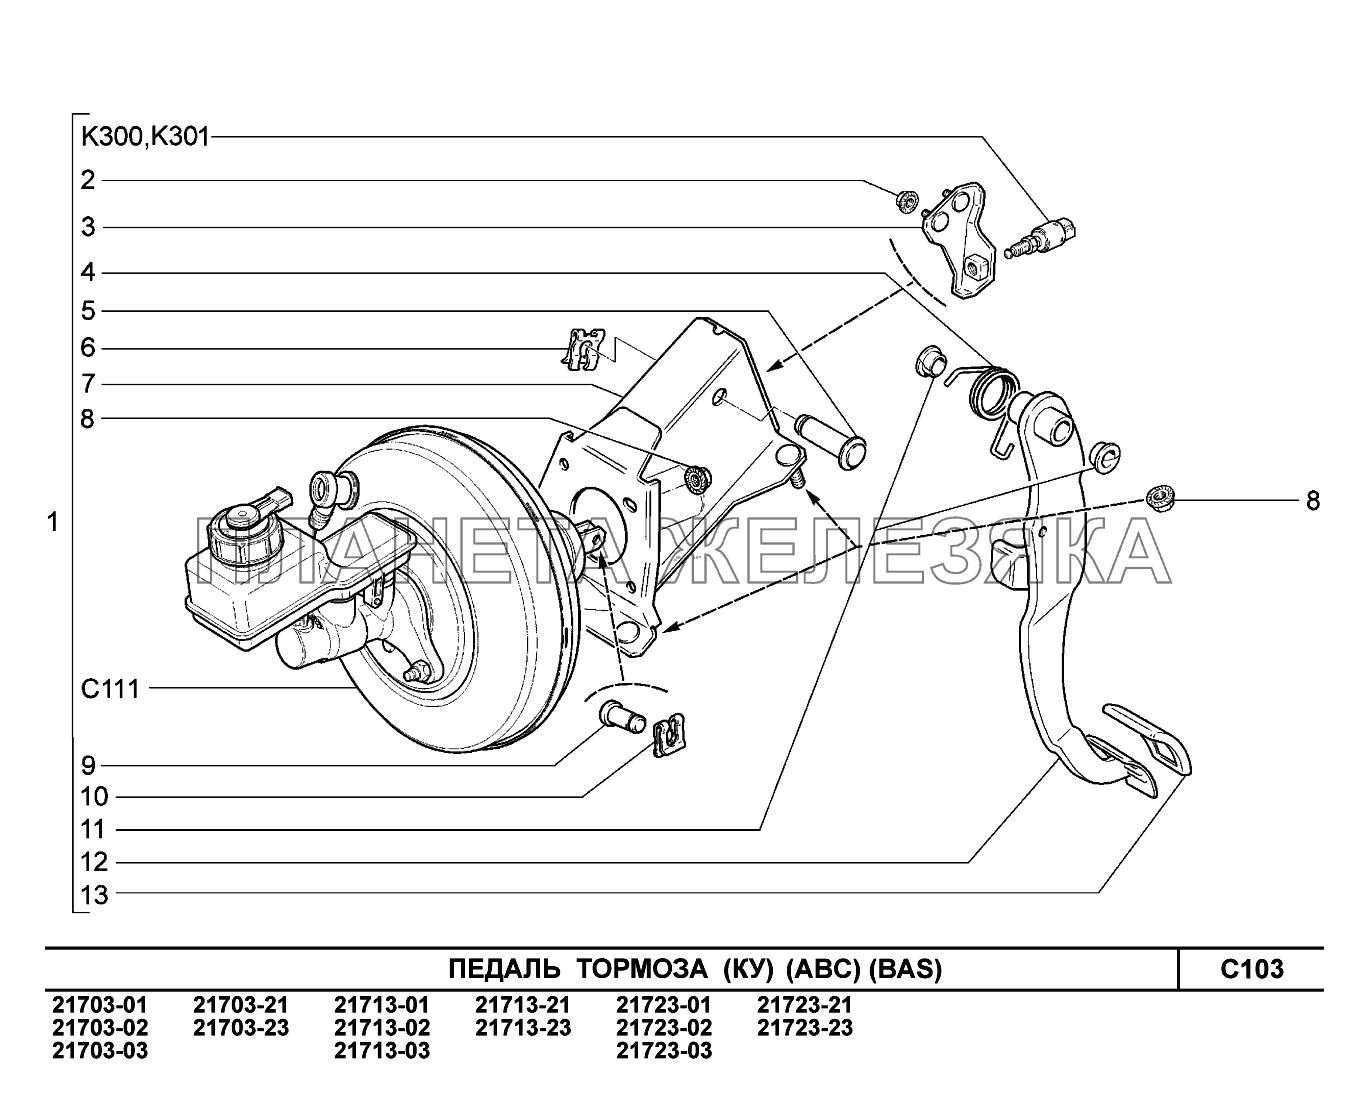 C103. Педаль тормоза ВАЗ-2170 